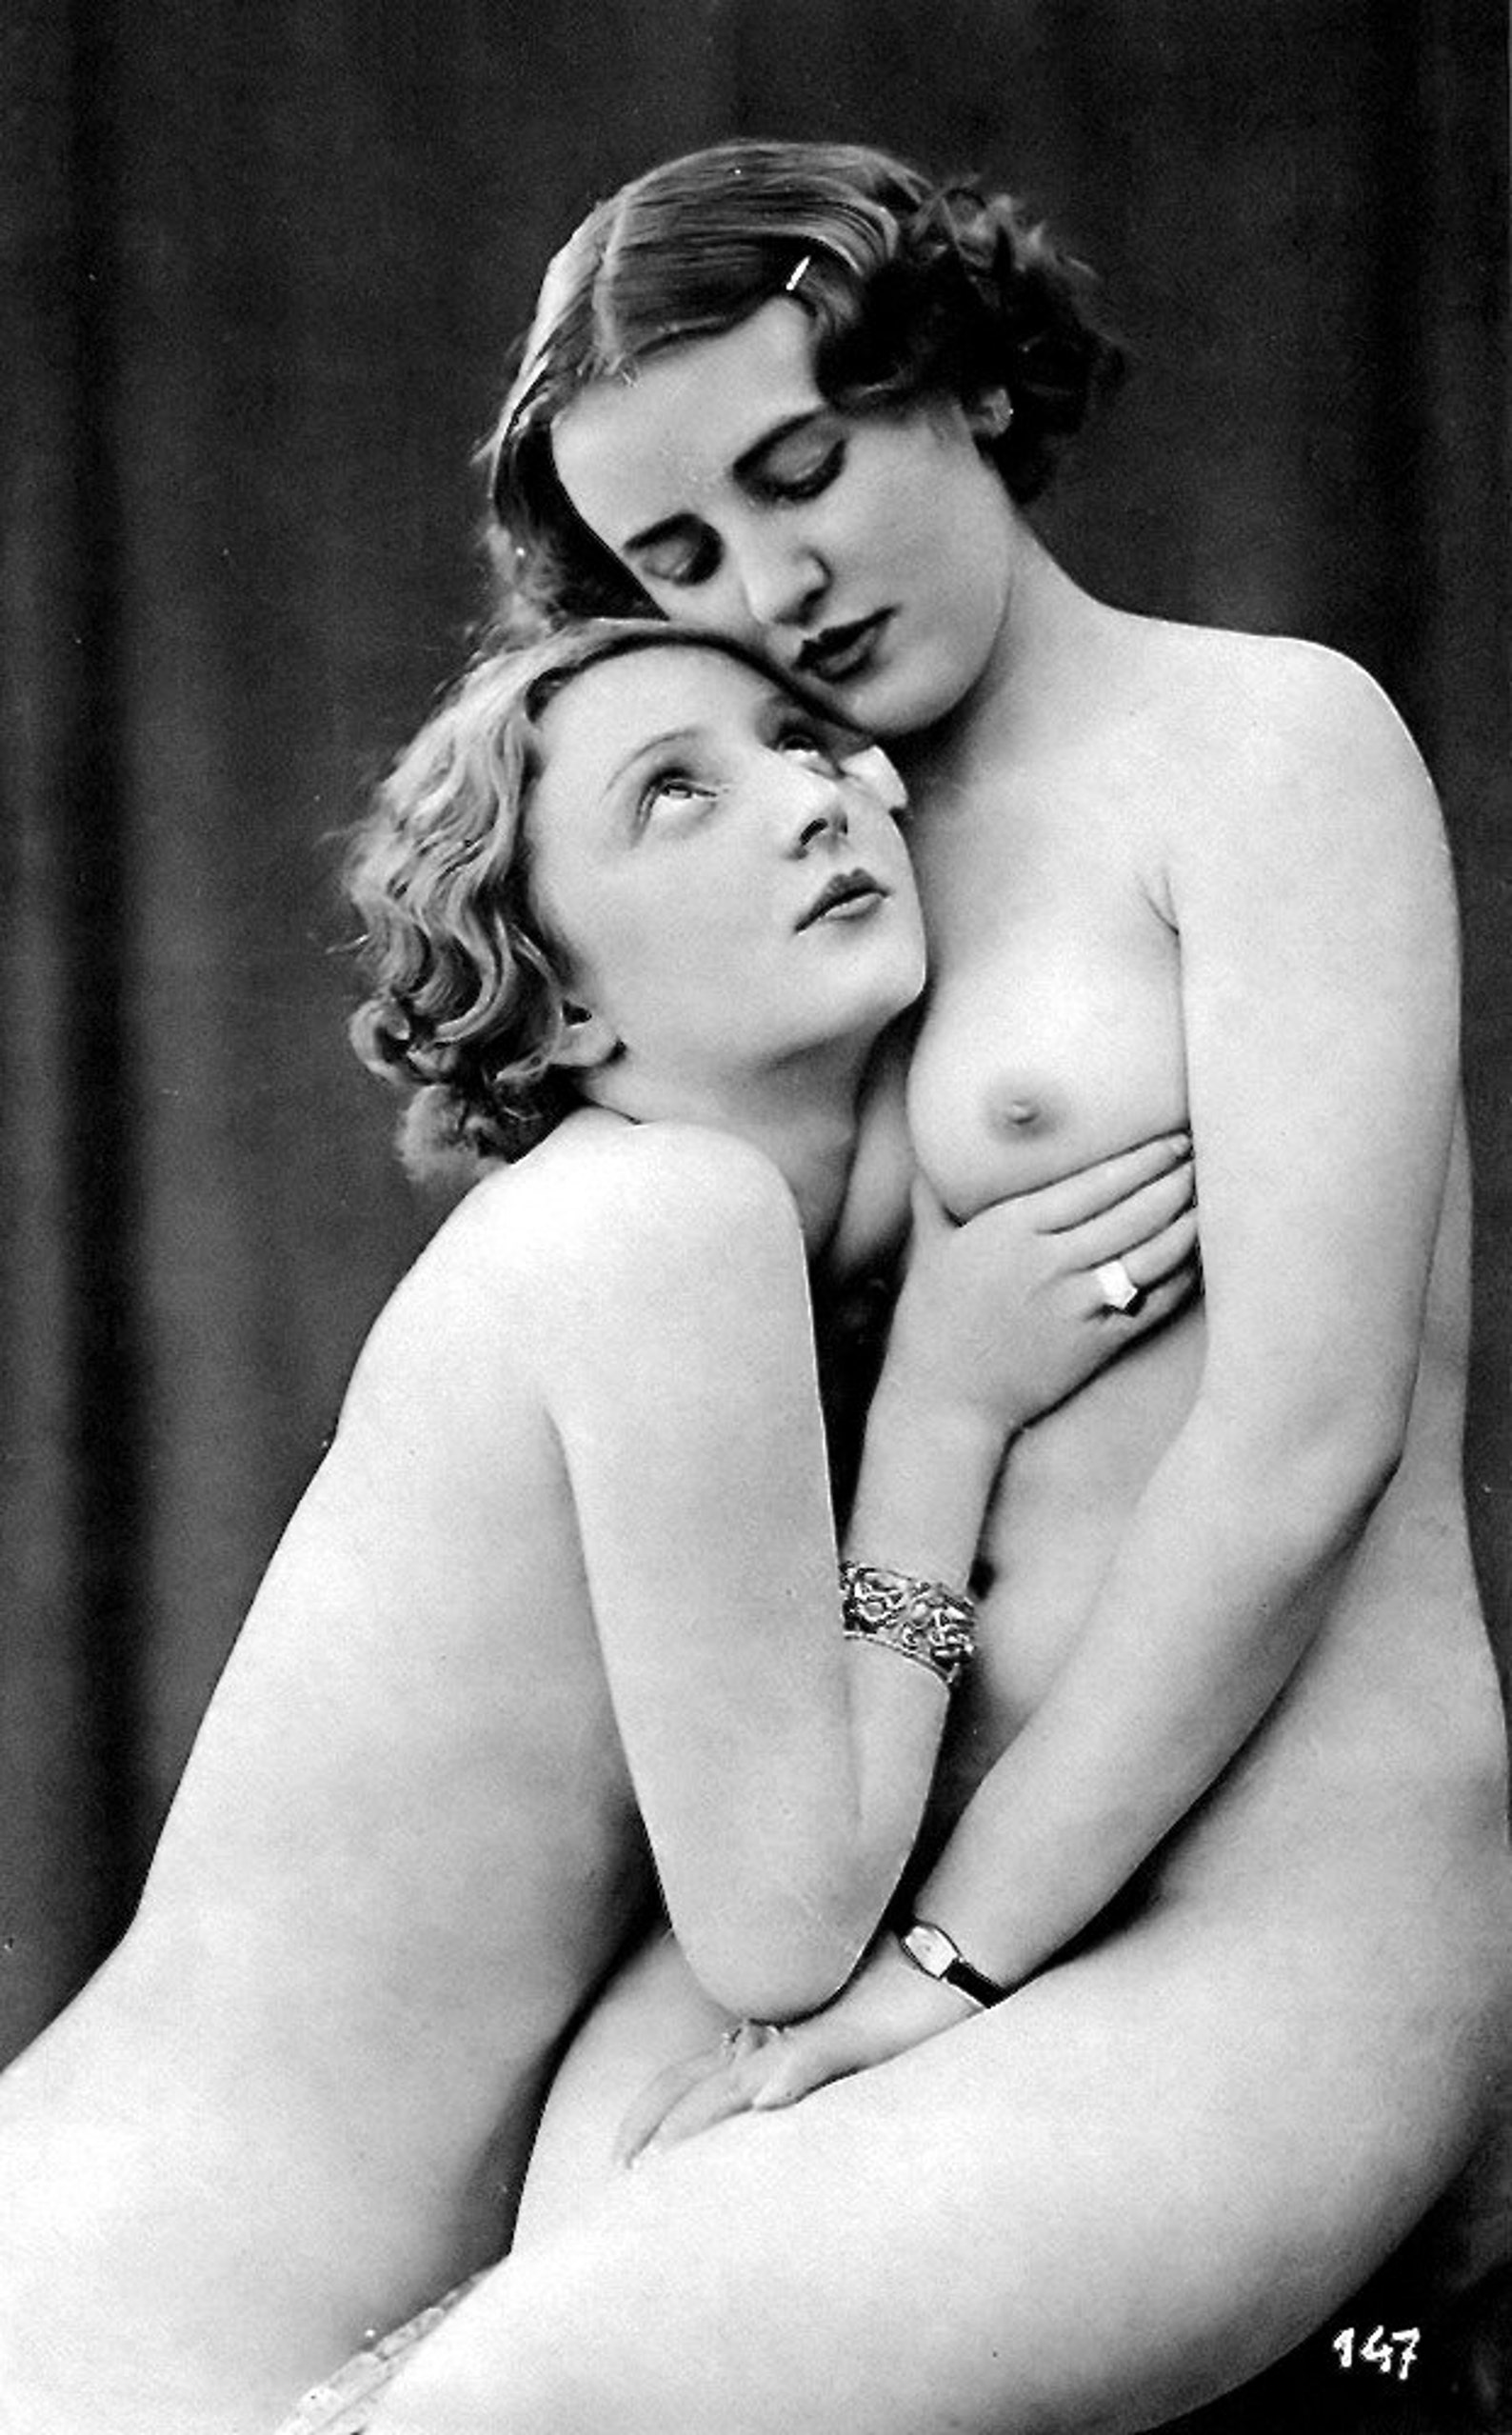 1920's Era Lesbian Nude Study-French Postcard Style image 1.